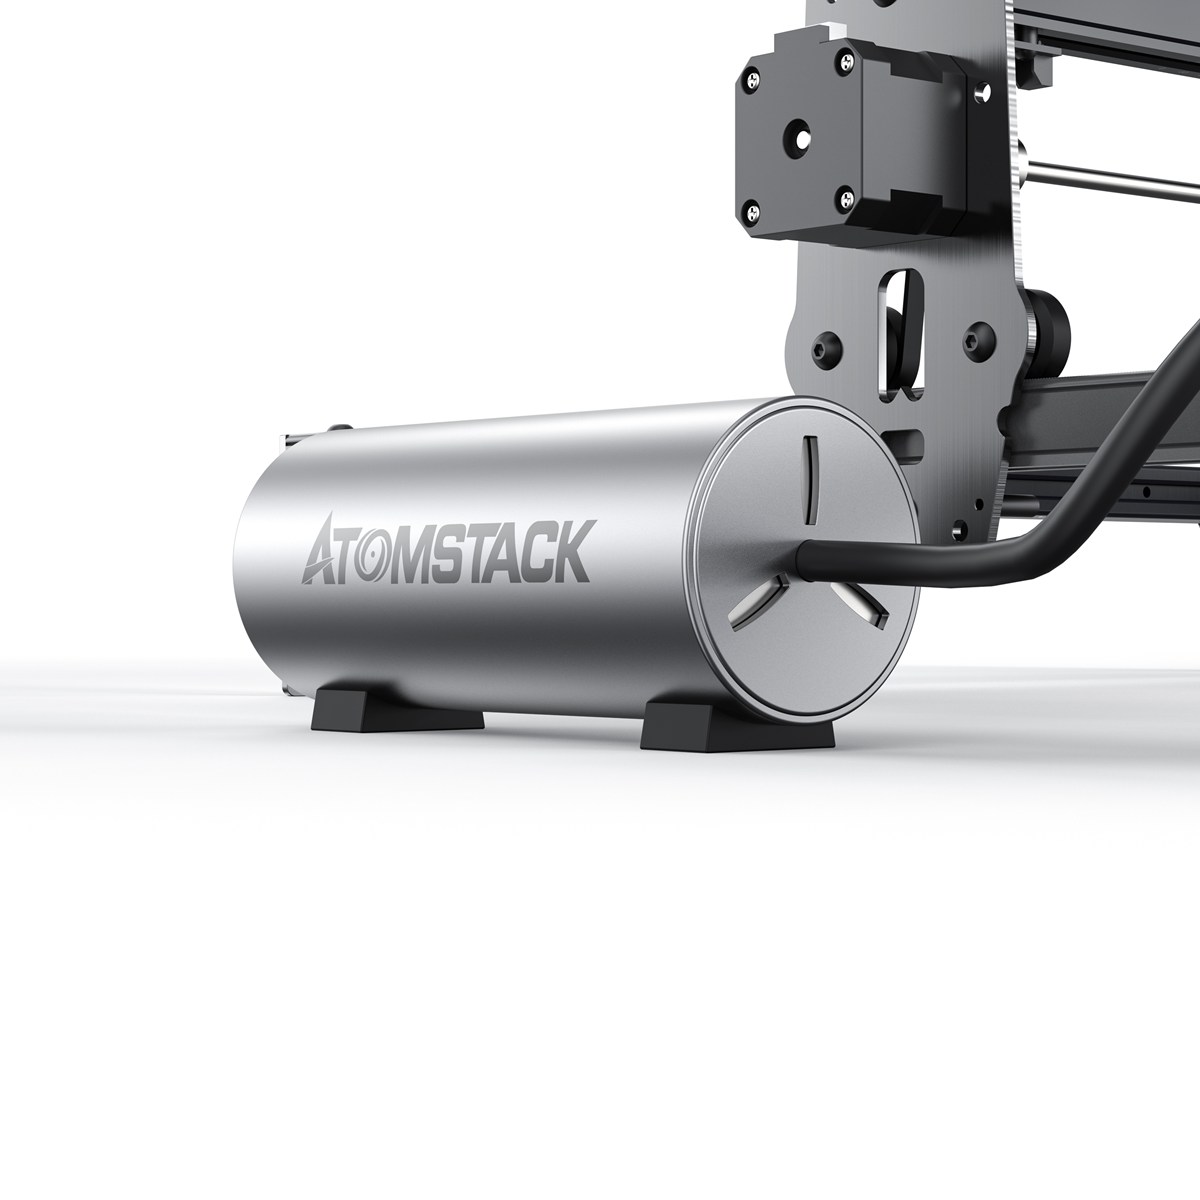 Atomstack-Air-Assist-System-for-Laser-Engraving-Machine-Laser-Cutting-Engraving-Air-assisted-Accesso-1932834-5